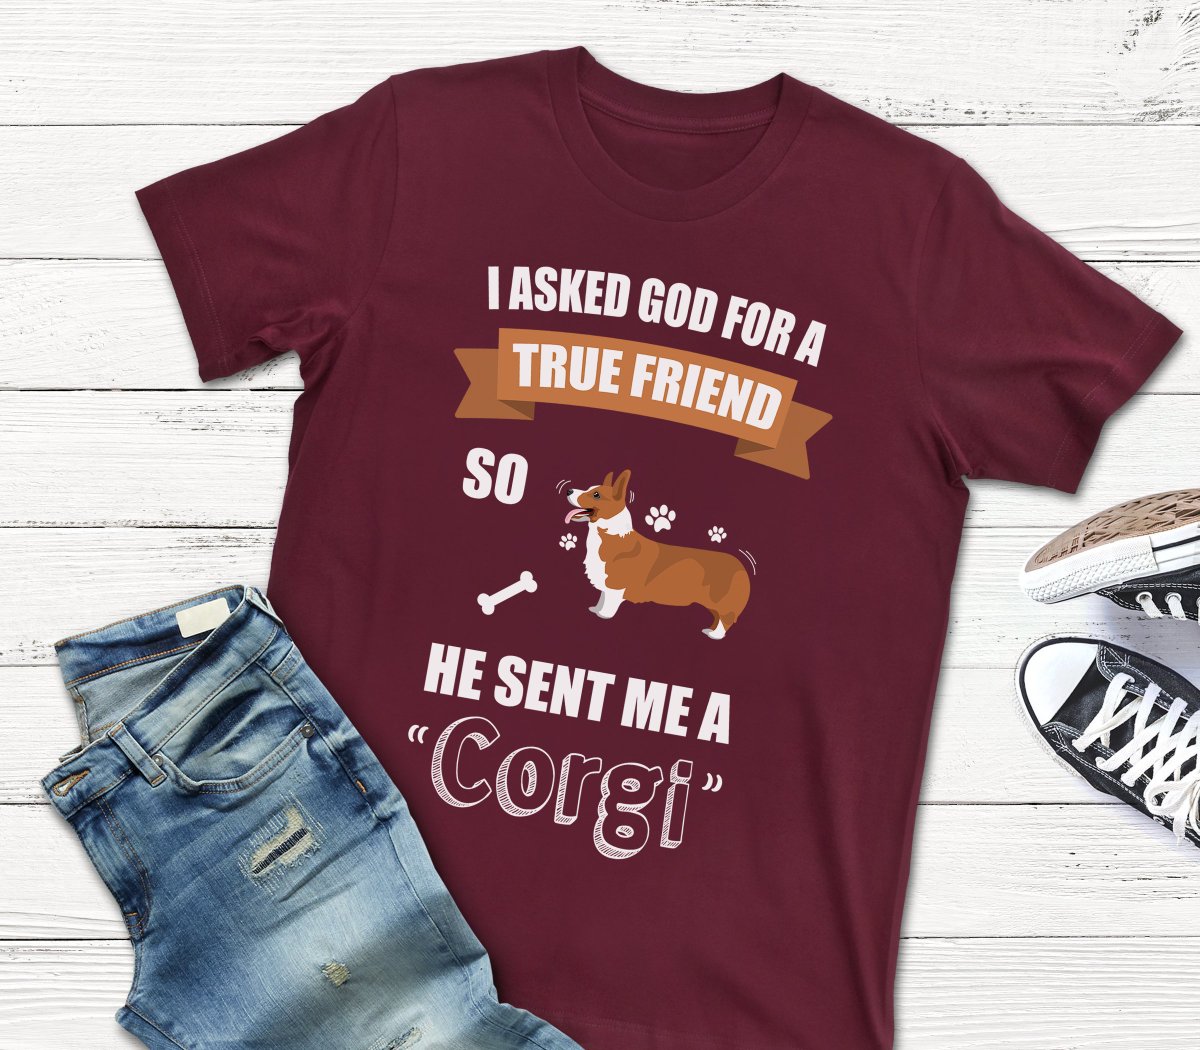 Corgi T-Shirt, Corgi T Shirts, Corgi Gift, Corgi Gifts, Corgi Tee Shirts etsy.me/2n7OmoN #corgi #corgies #corgimom #corgidad #corgigift #corgigifts #corgipuppy #corgidog #corgidogs #ilovemycorgi